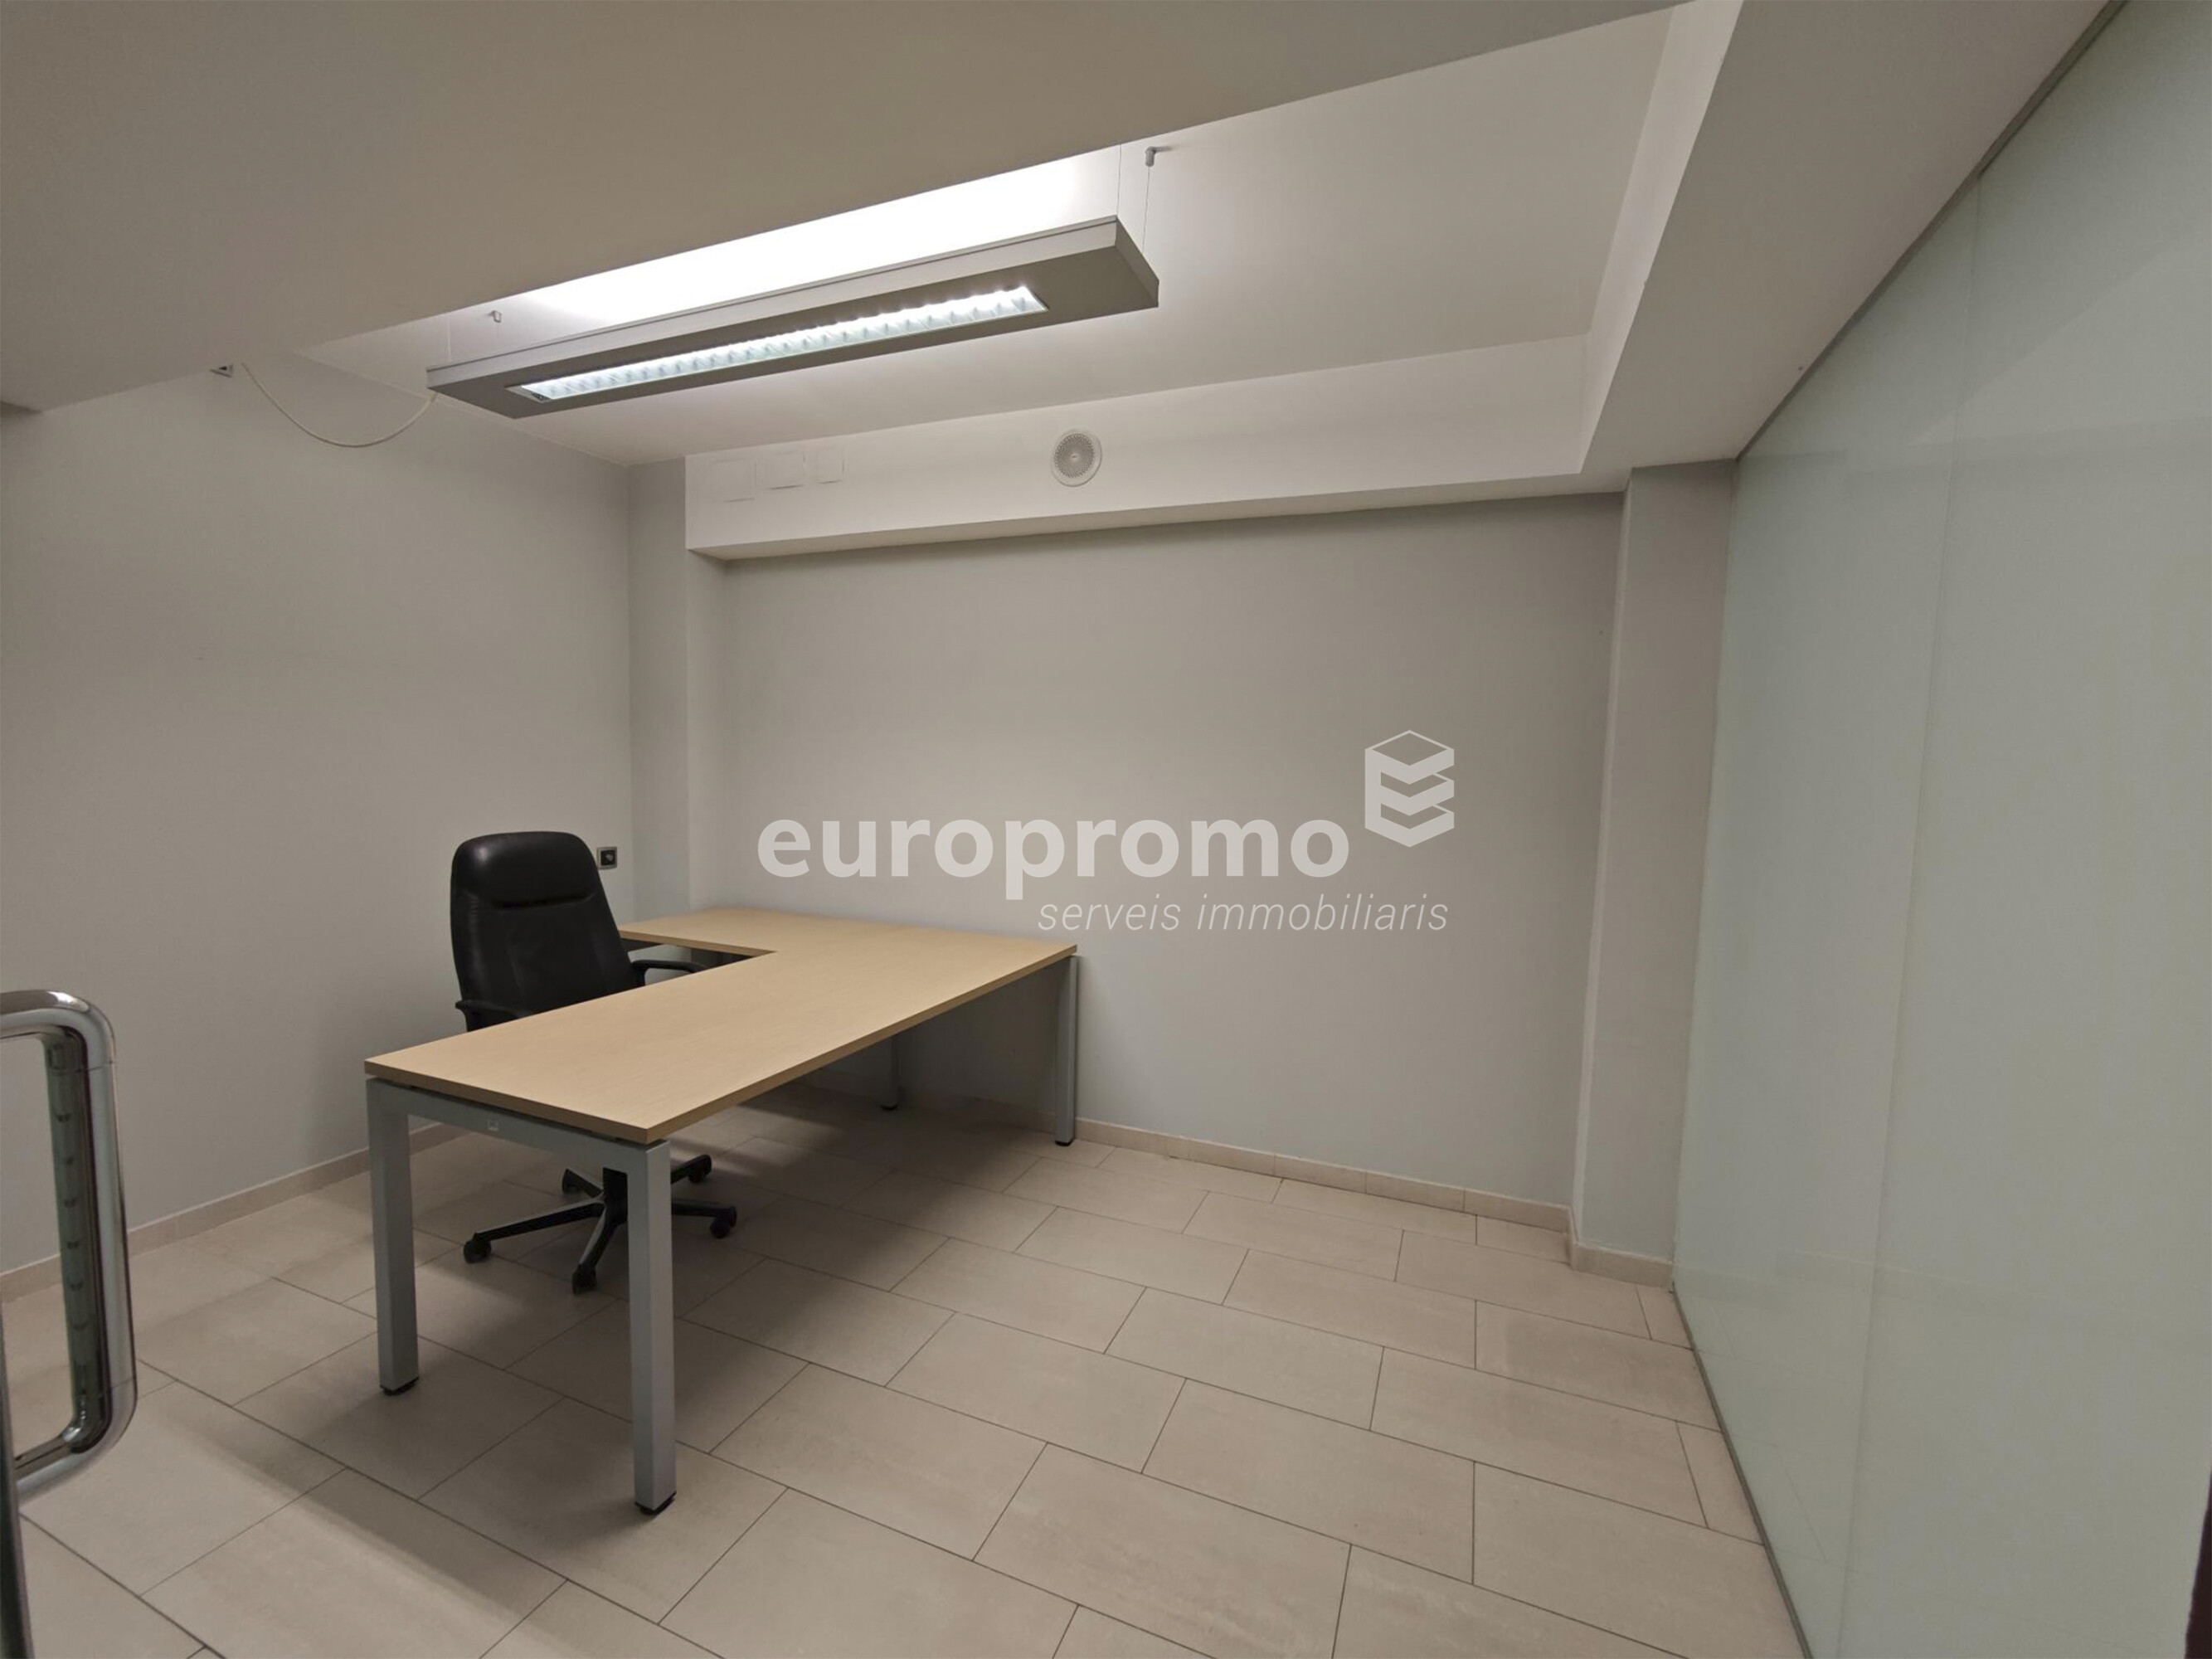 Oficina de 400m2 distribuida en dues plantes, situada al centre de Girona!